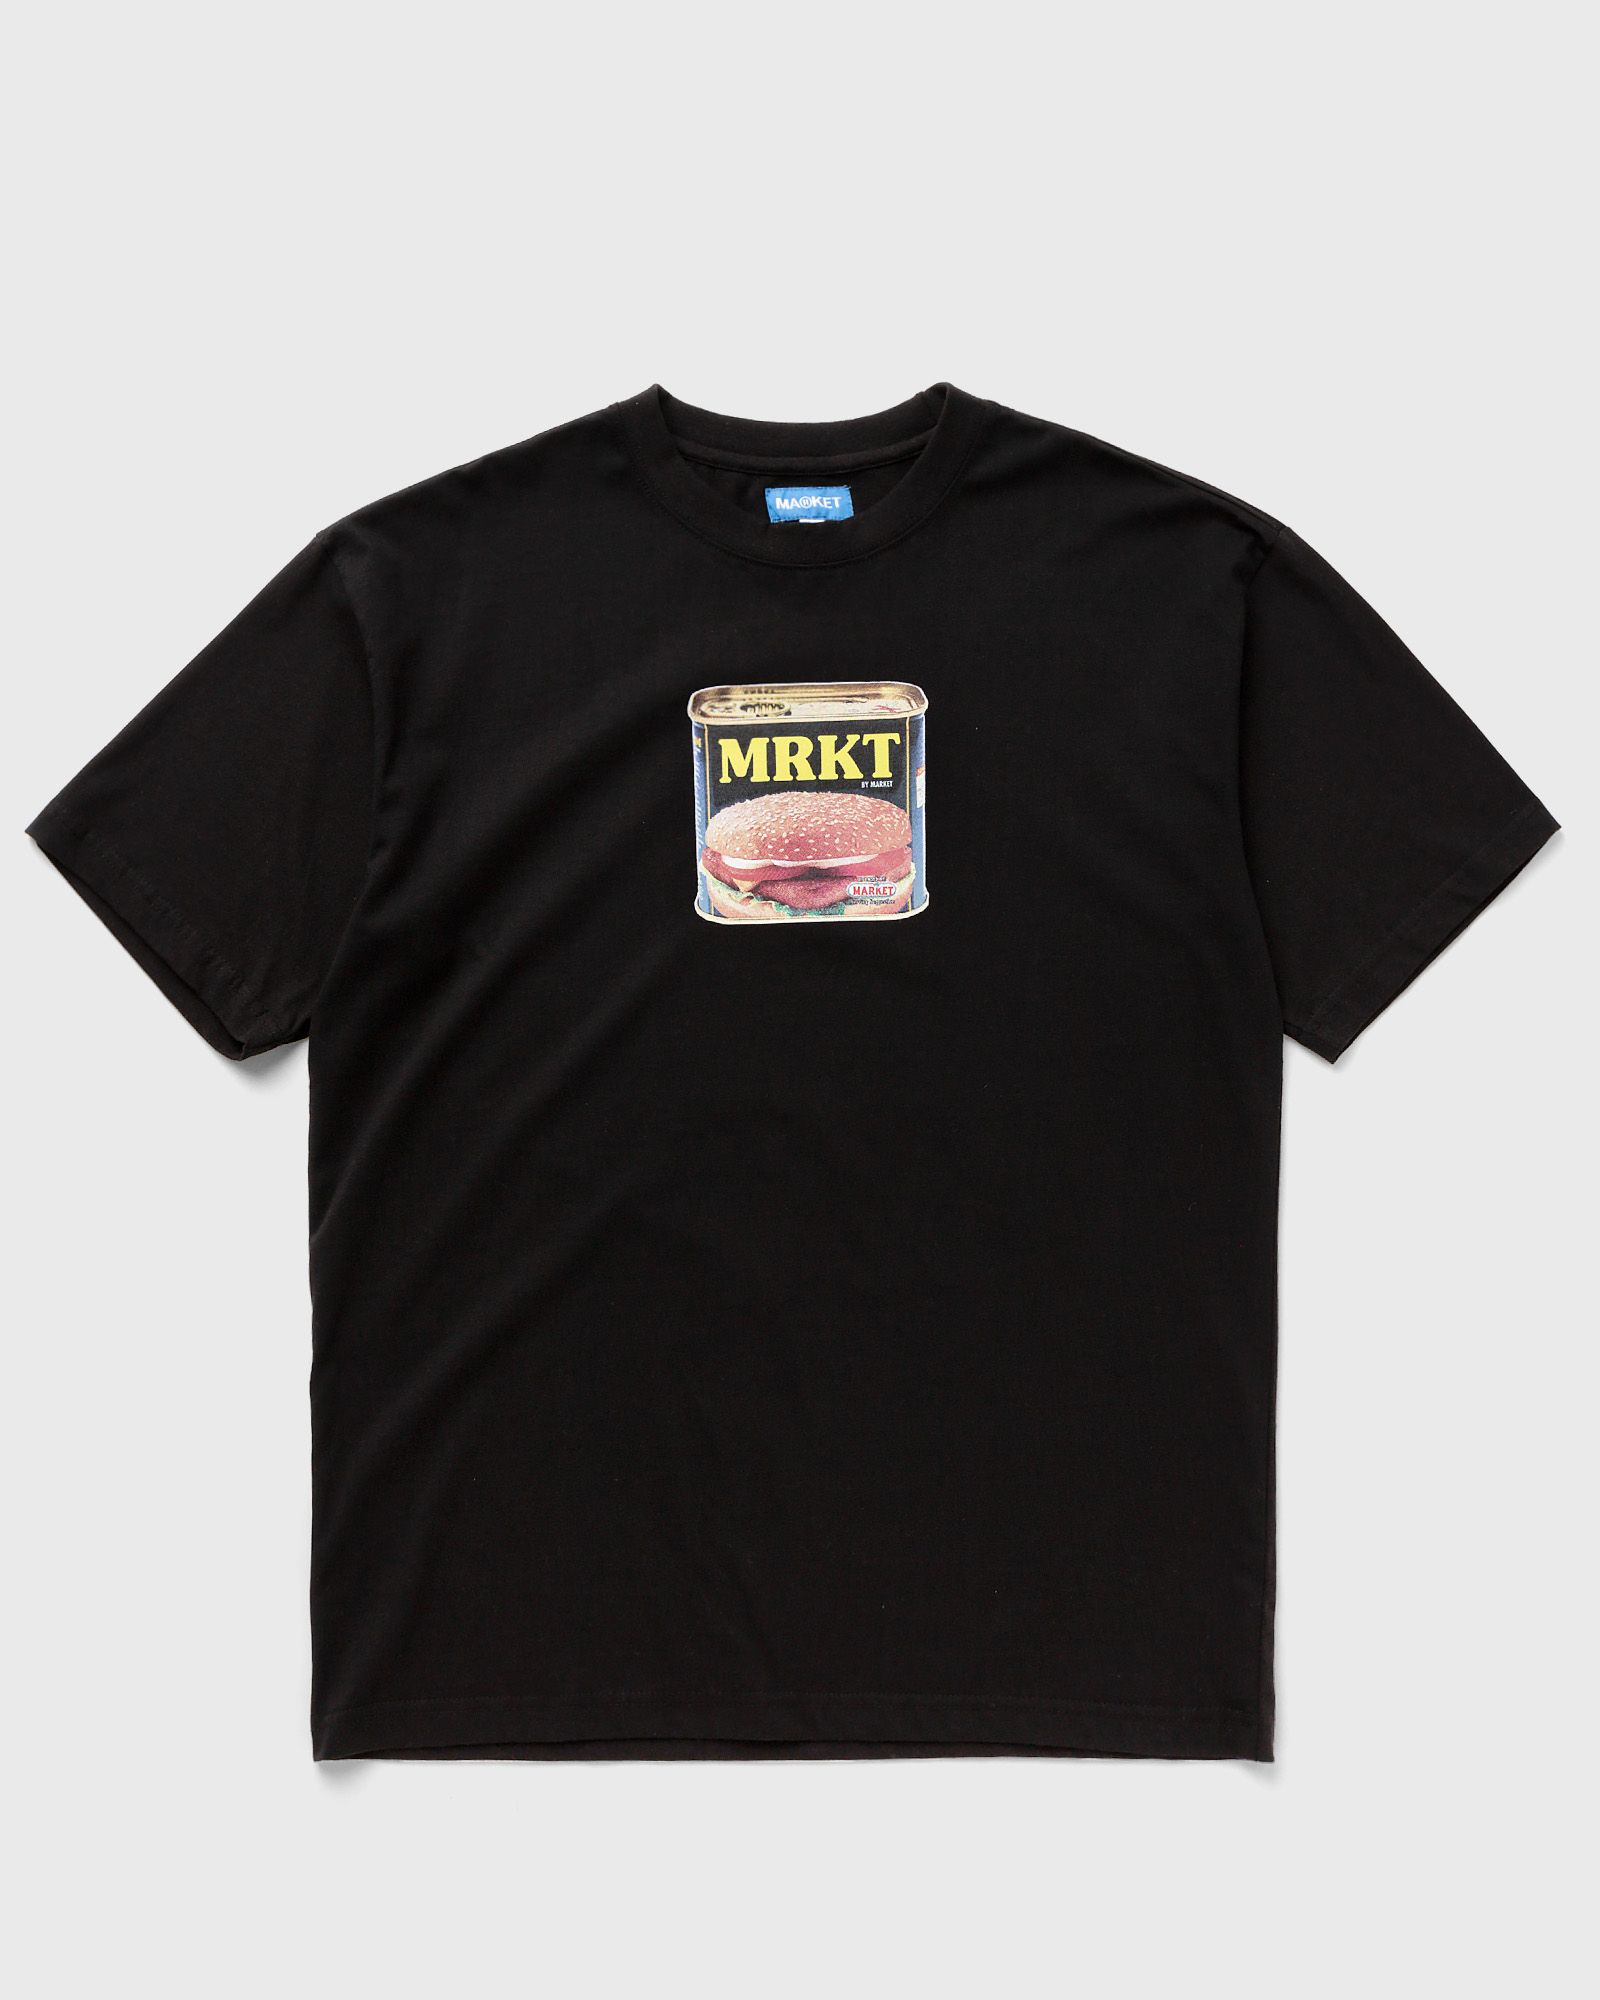 Market - fresh meat t-shirt men shortsleeves black in größe:s